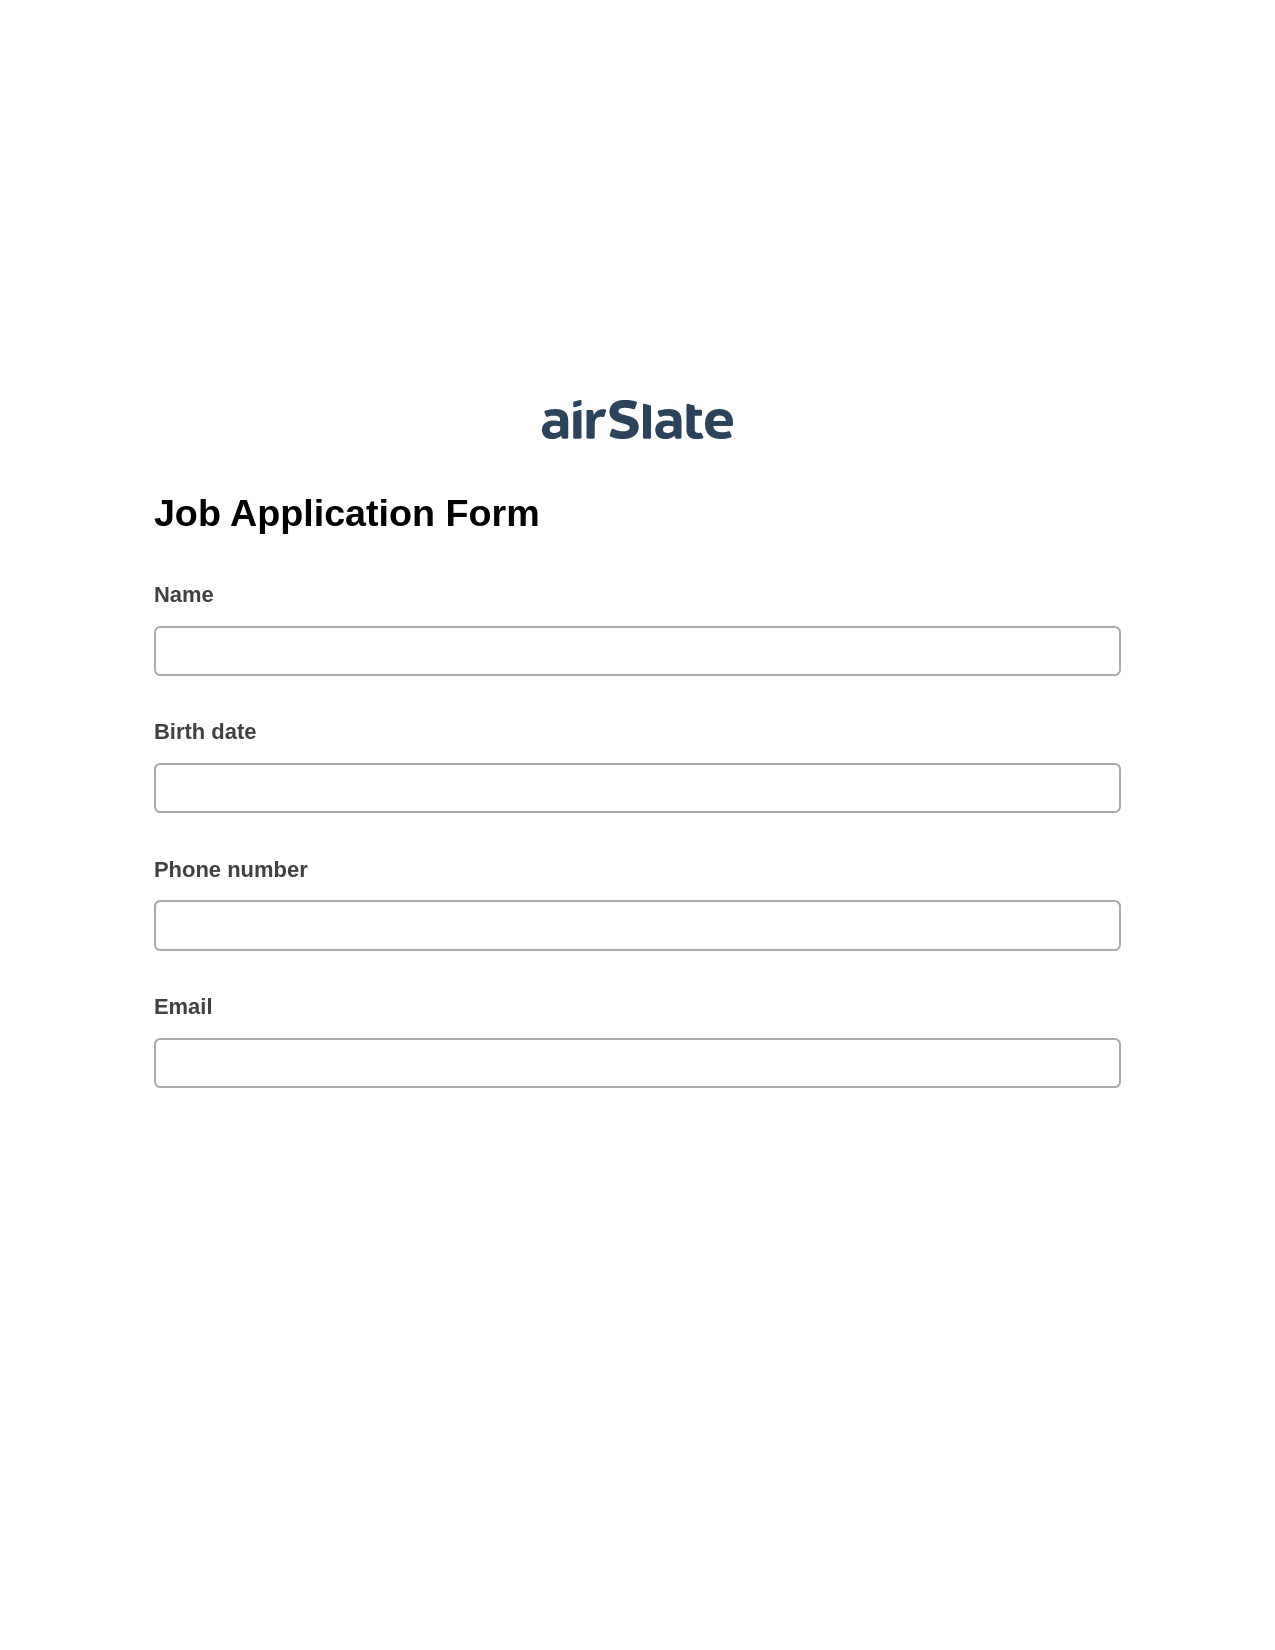 Multirole Job Application Form Pre-fill from CSV File Bot, SendGrid send Campaign bot, Export to Salesforce Bot